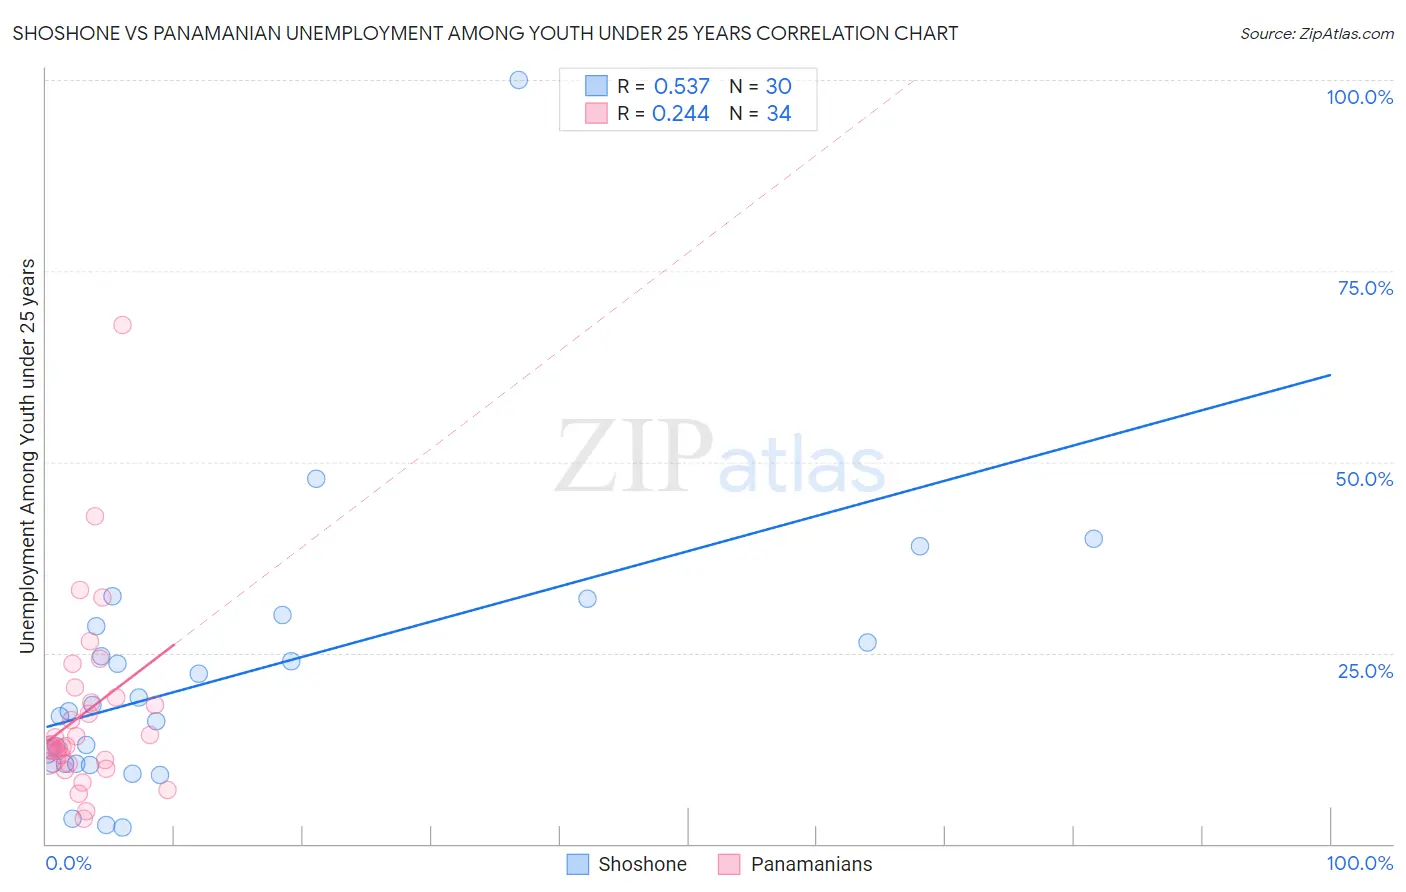 Shoshone vs Panamanian Unemployment Among Youth under 25 years